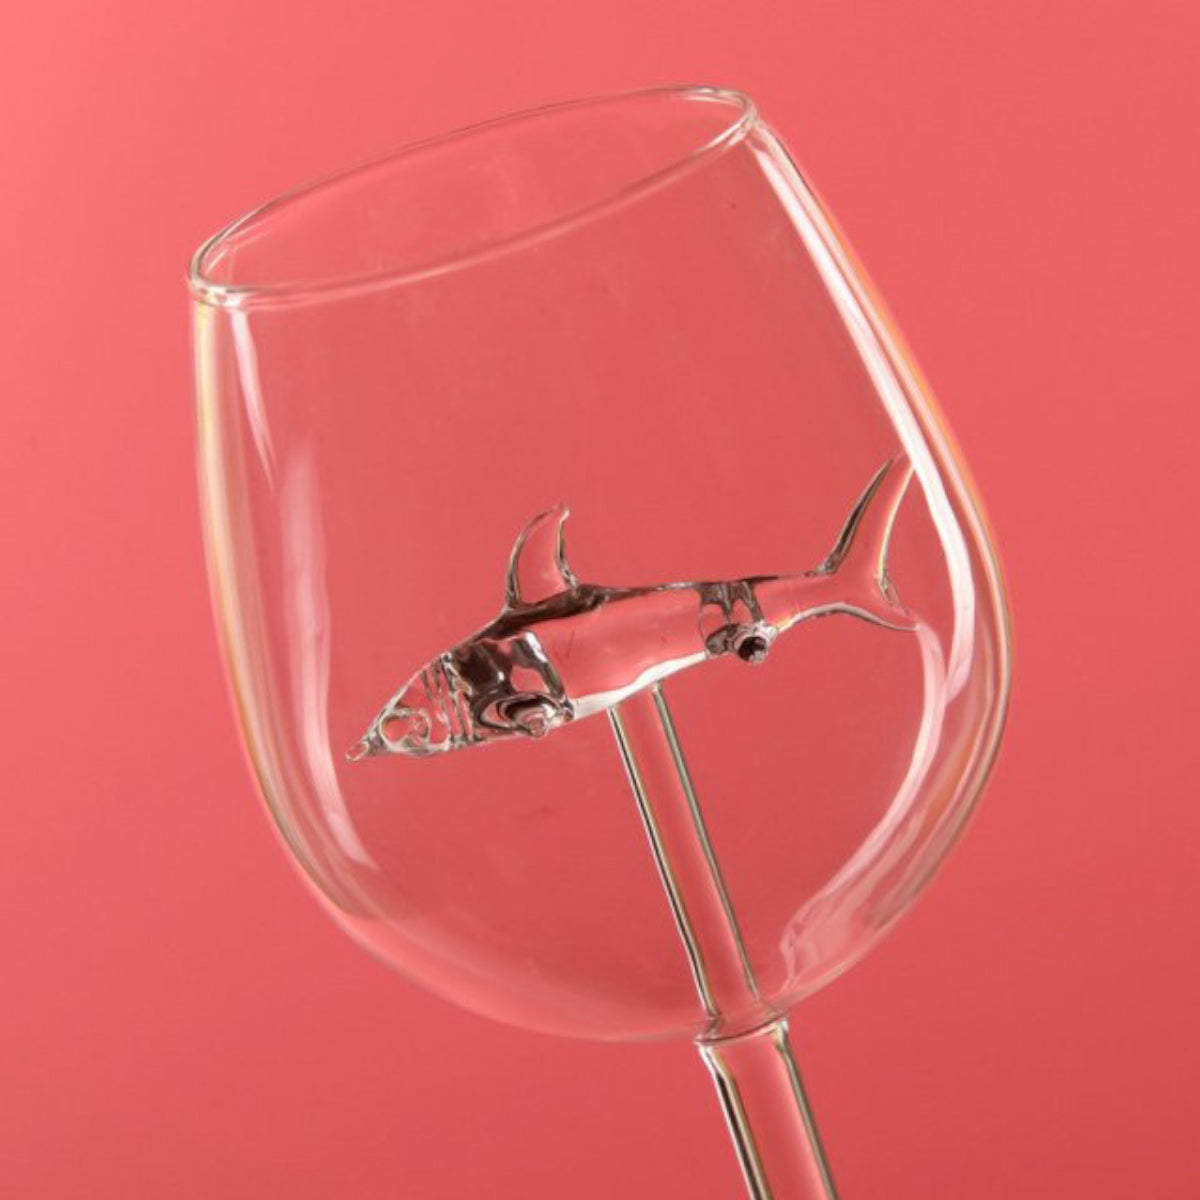 Shark-Inside Transparent Wine Glass